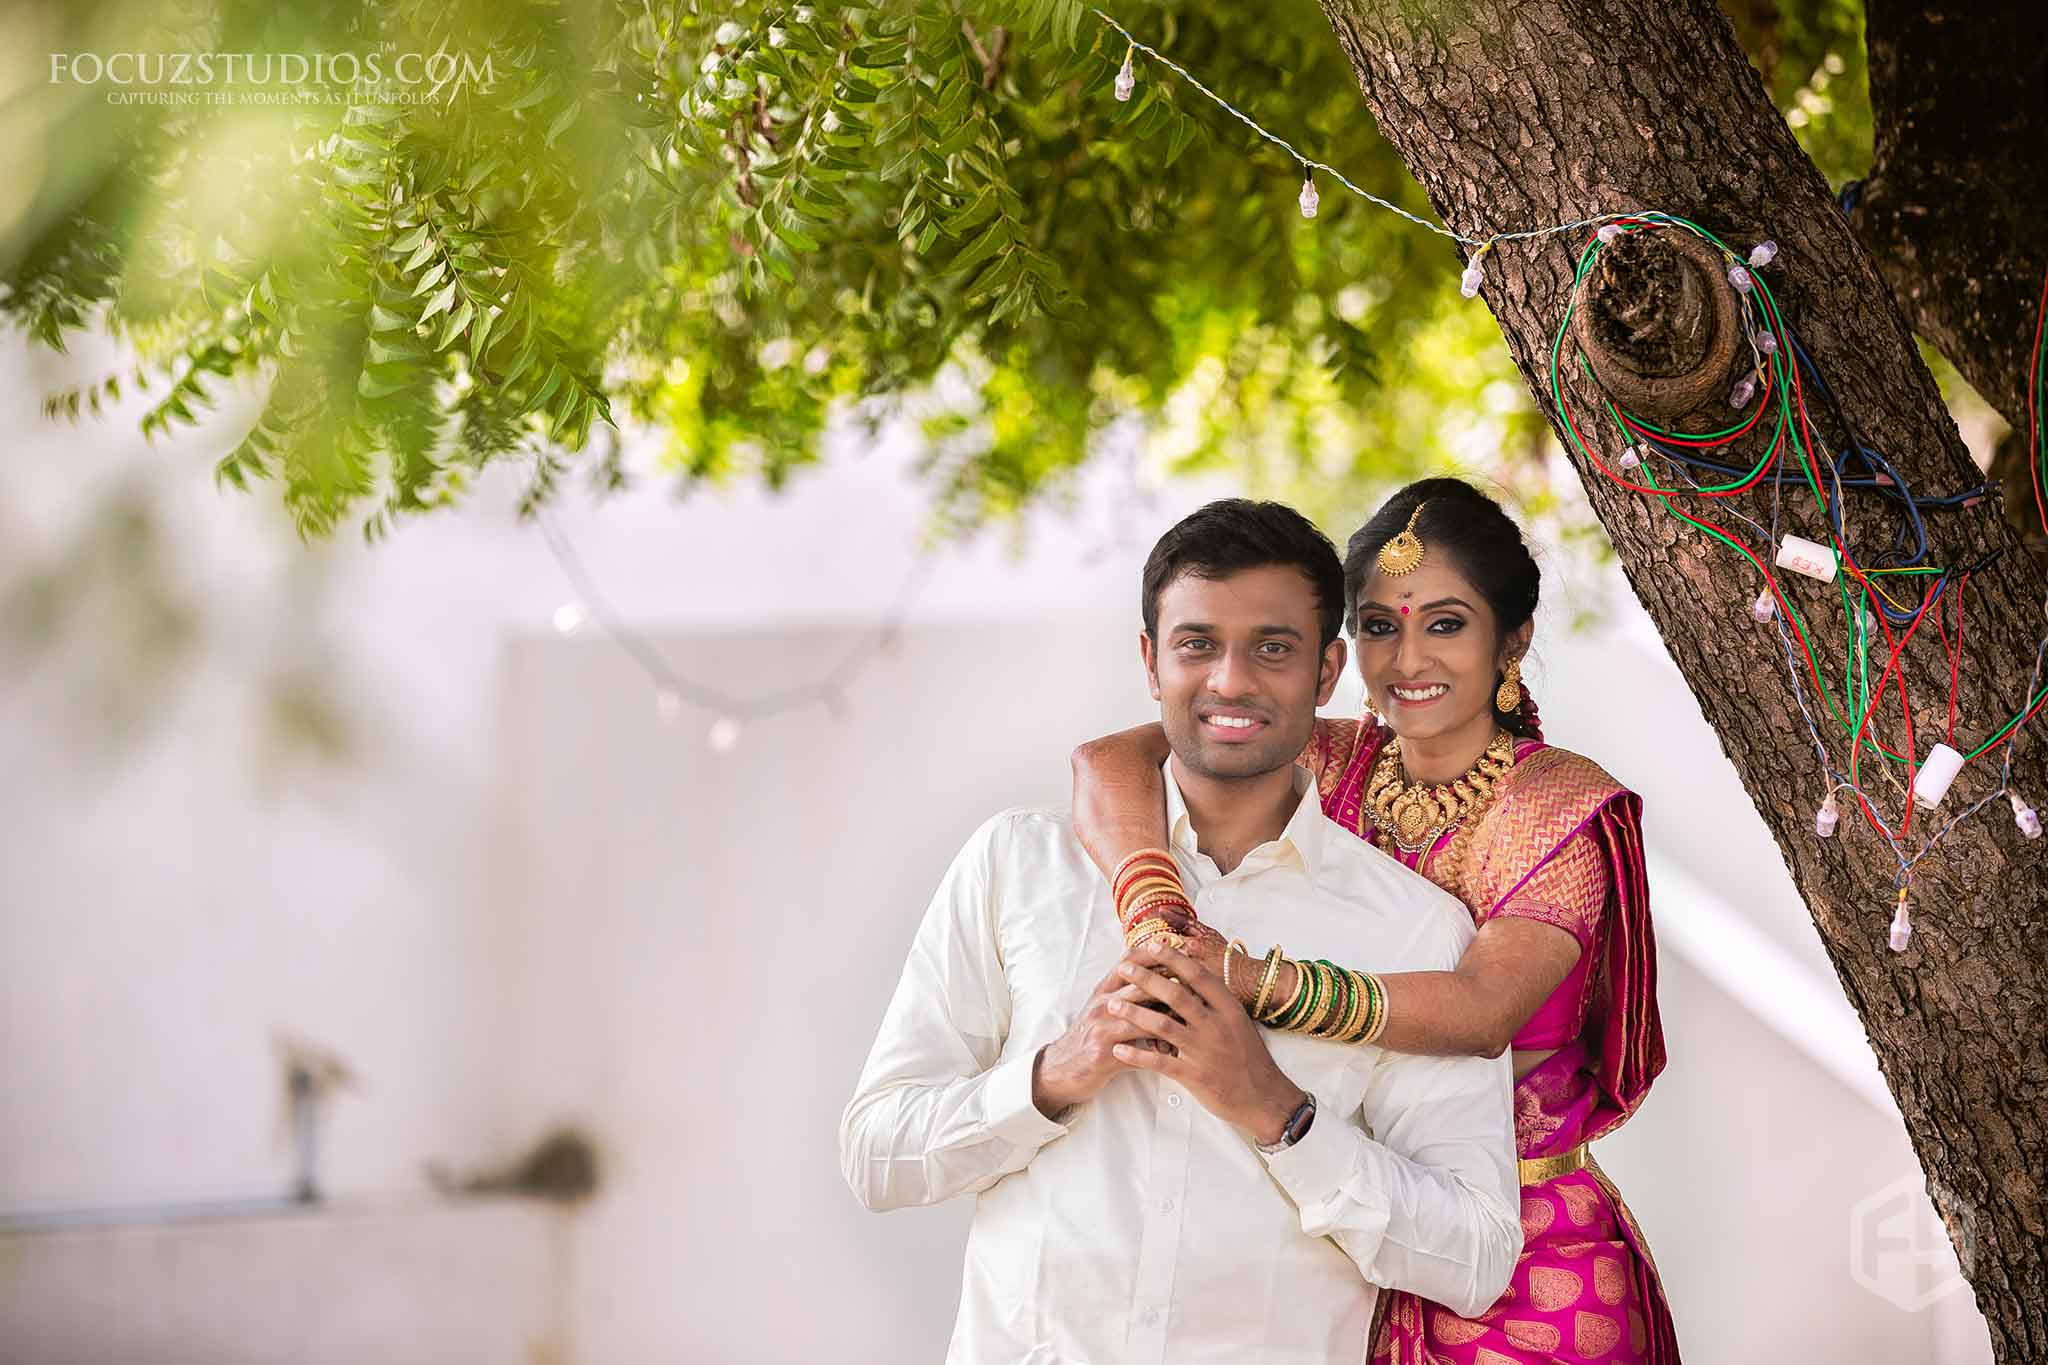 Ruturaj and Utkarsha in traditional Tamil wedding attire : r/csk